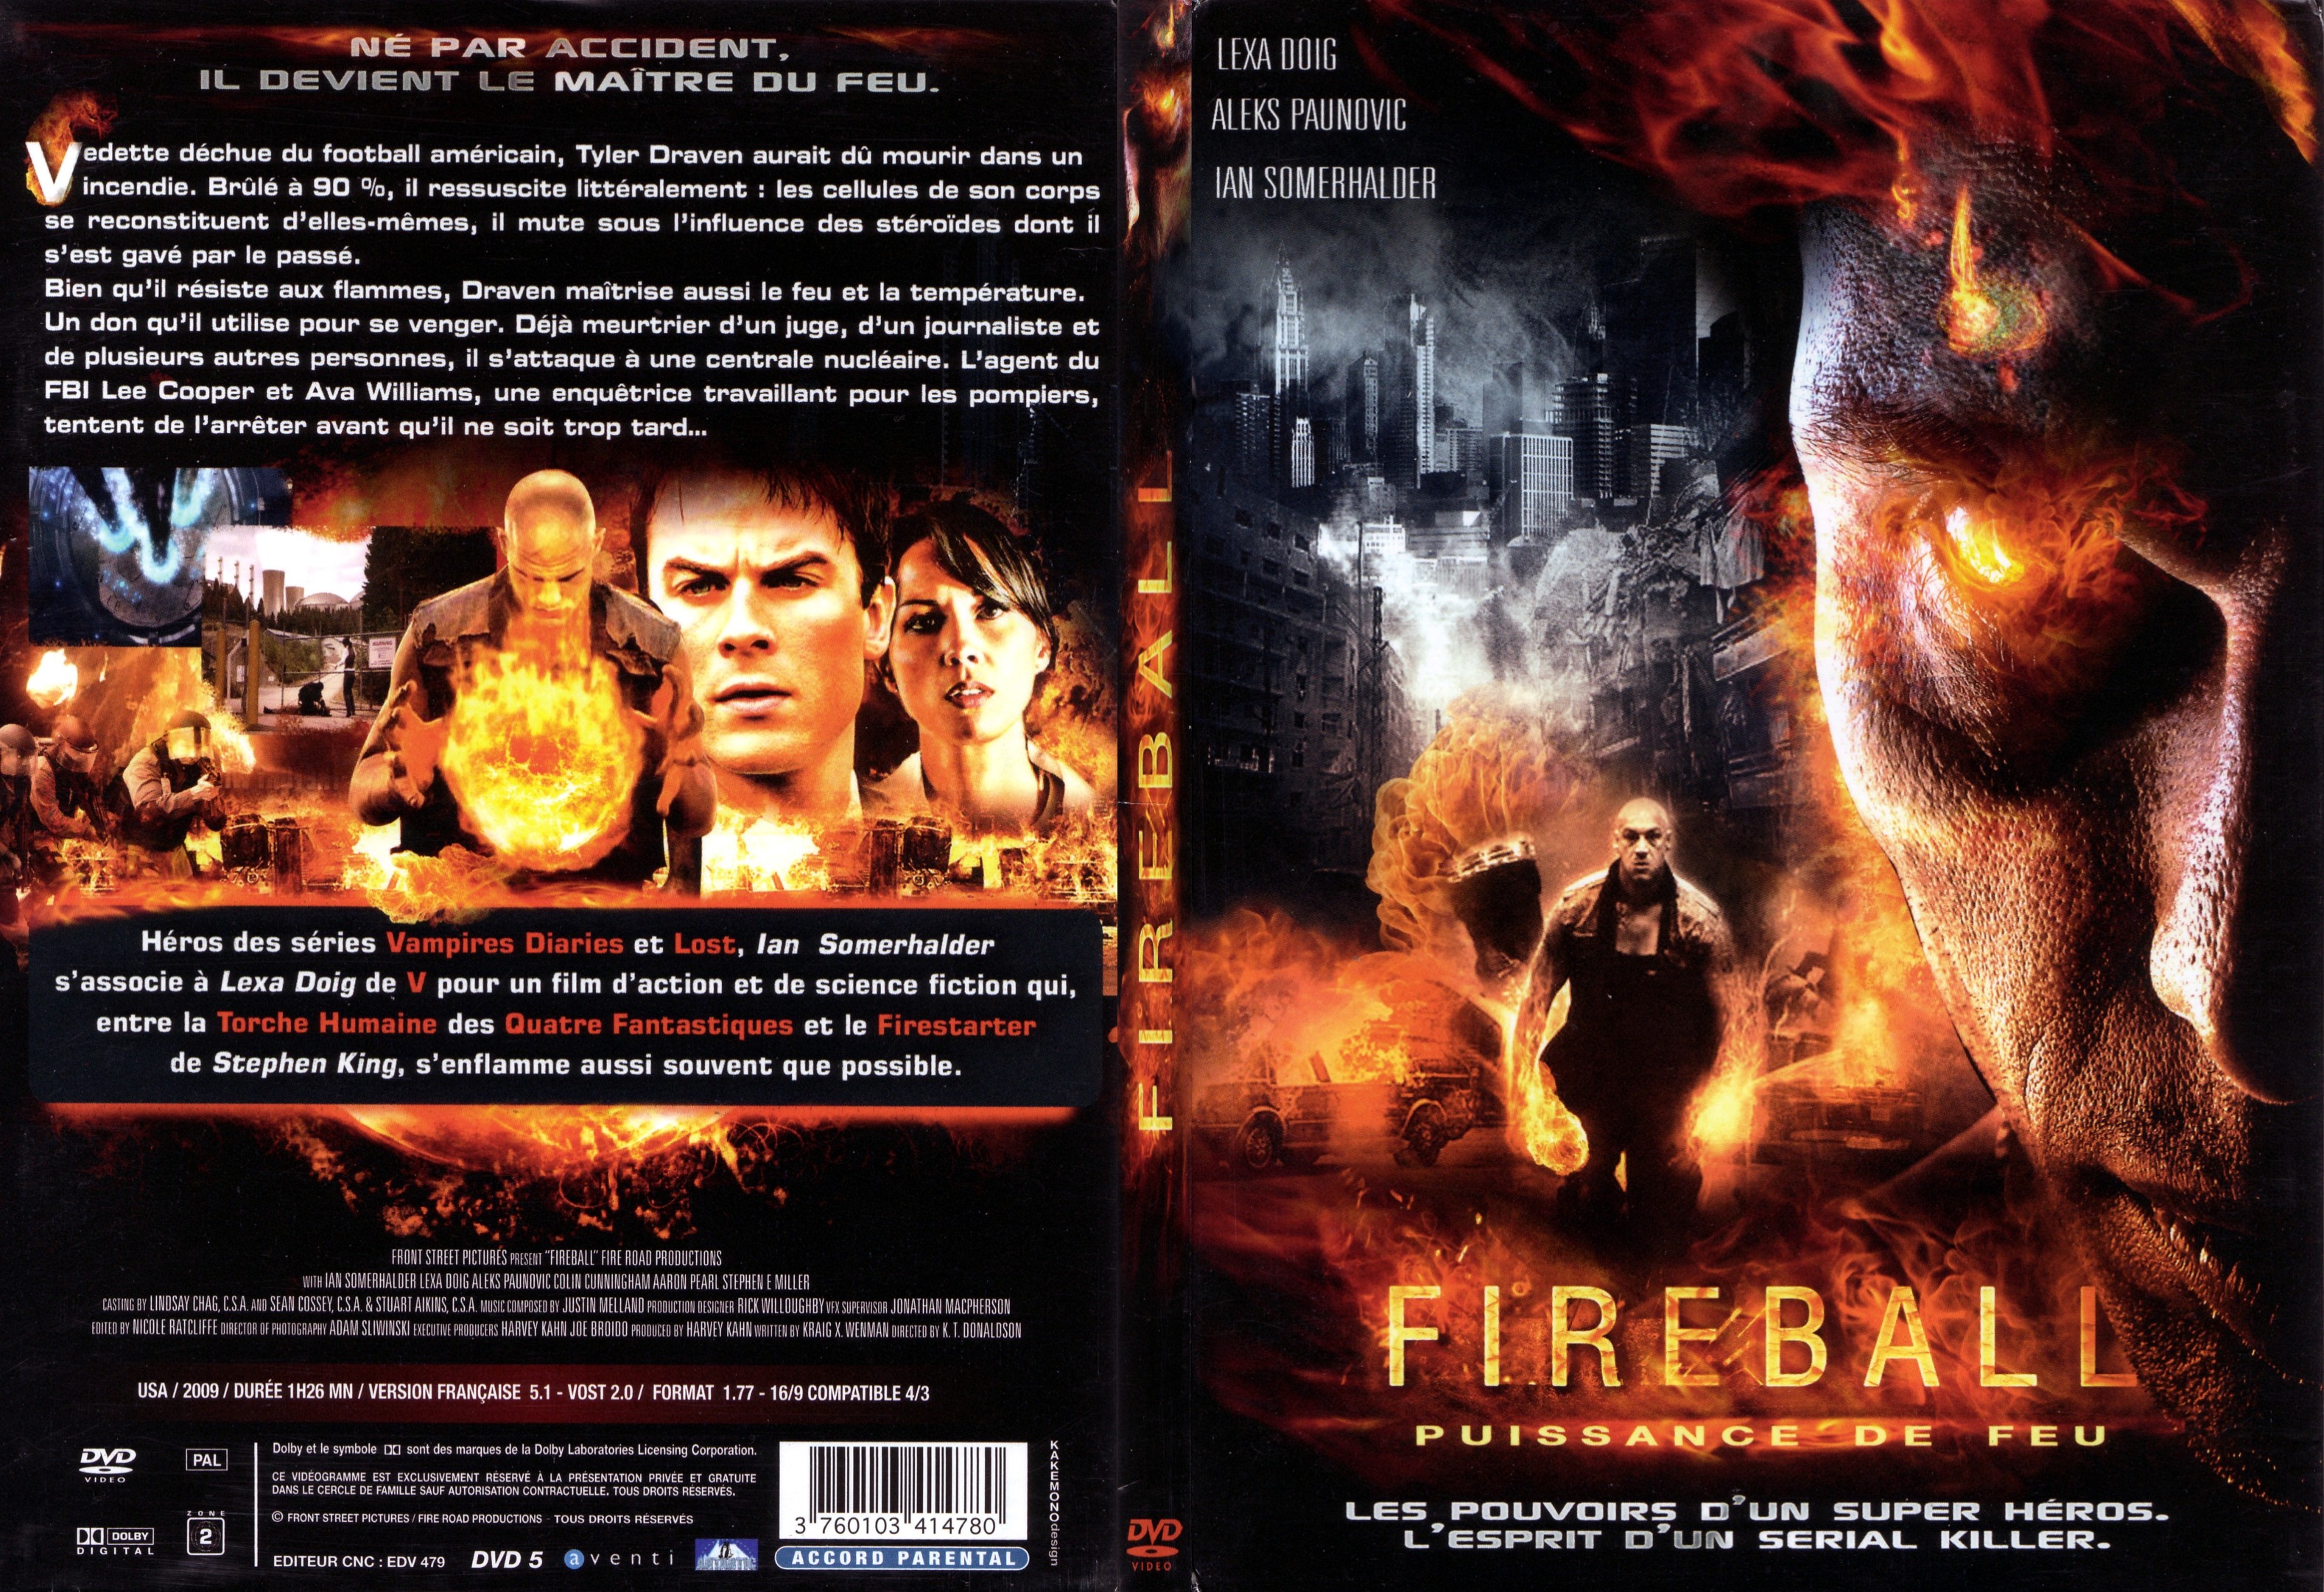 Jaquette DVD Fire Ball - Puissance de feu - SLIM